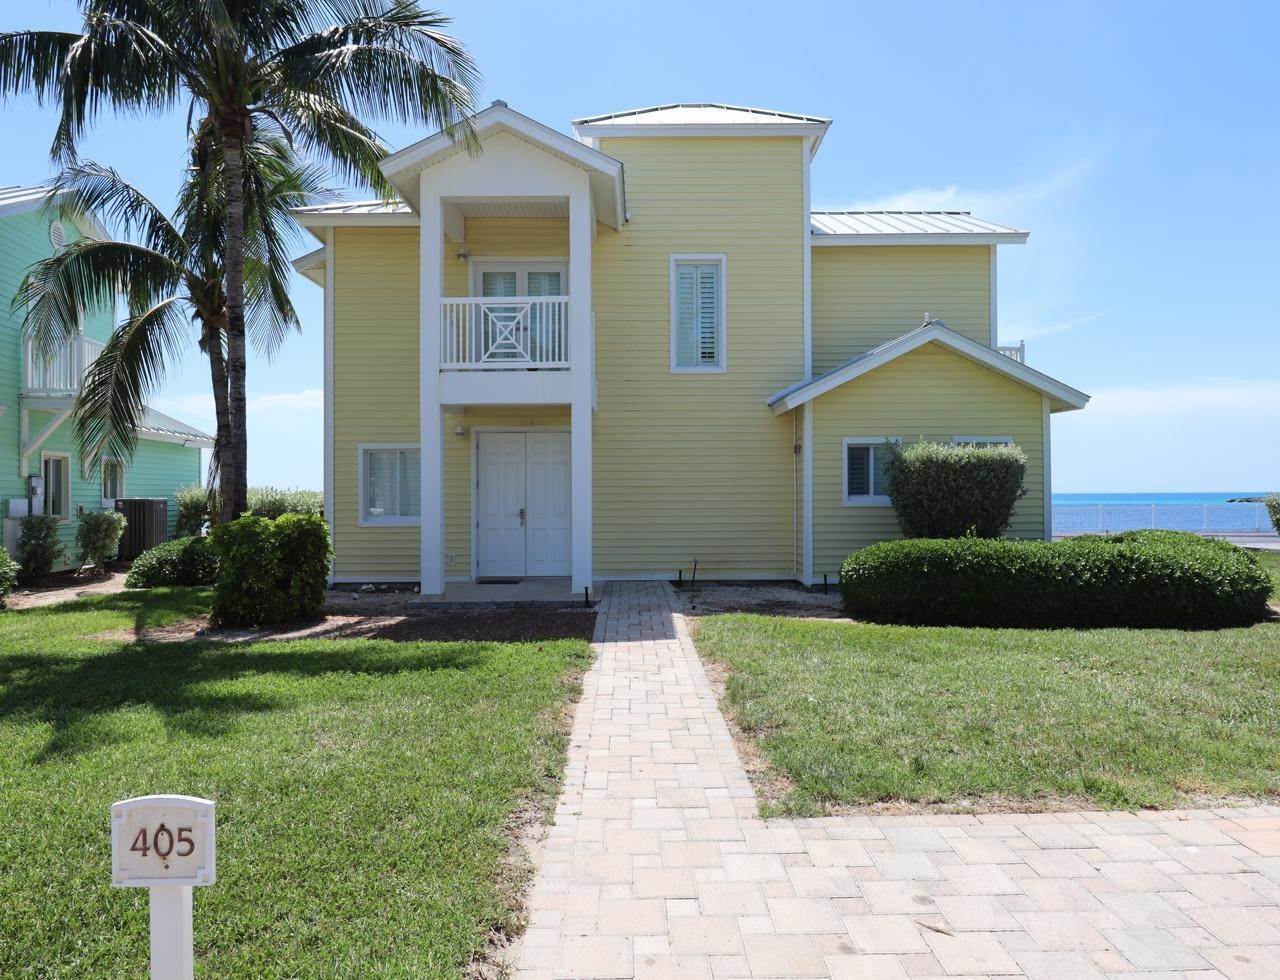 Single Family Homes for Sale at Bimini Bay, Bimini, Bahamas